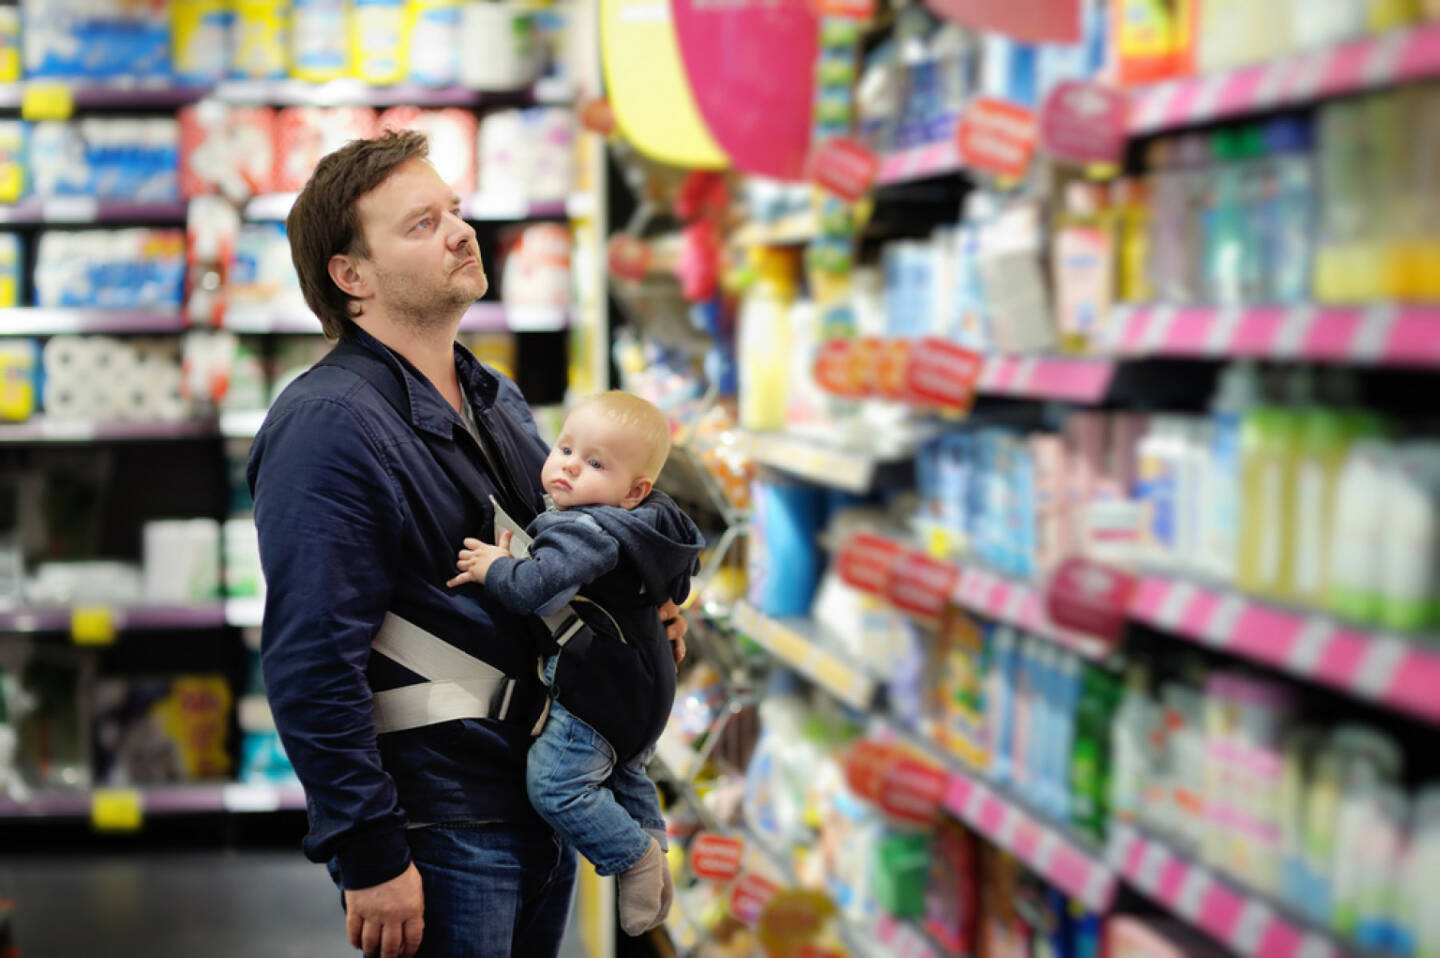 Windeln, Pflegeprodukte, Baby, Konsumgüter, Geschäft, kaufen, Vater, Eltern, http://www.shutterstock.com/de/pic-296800304/stock-photo-father-and-his-son-at-supermarket.html